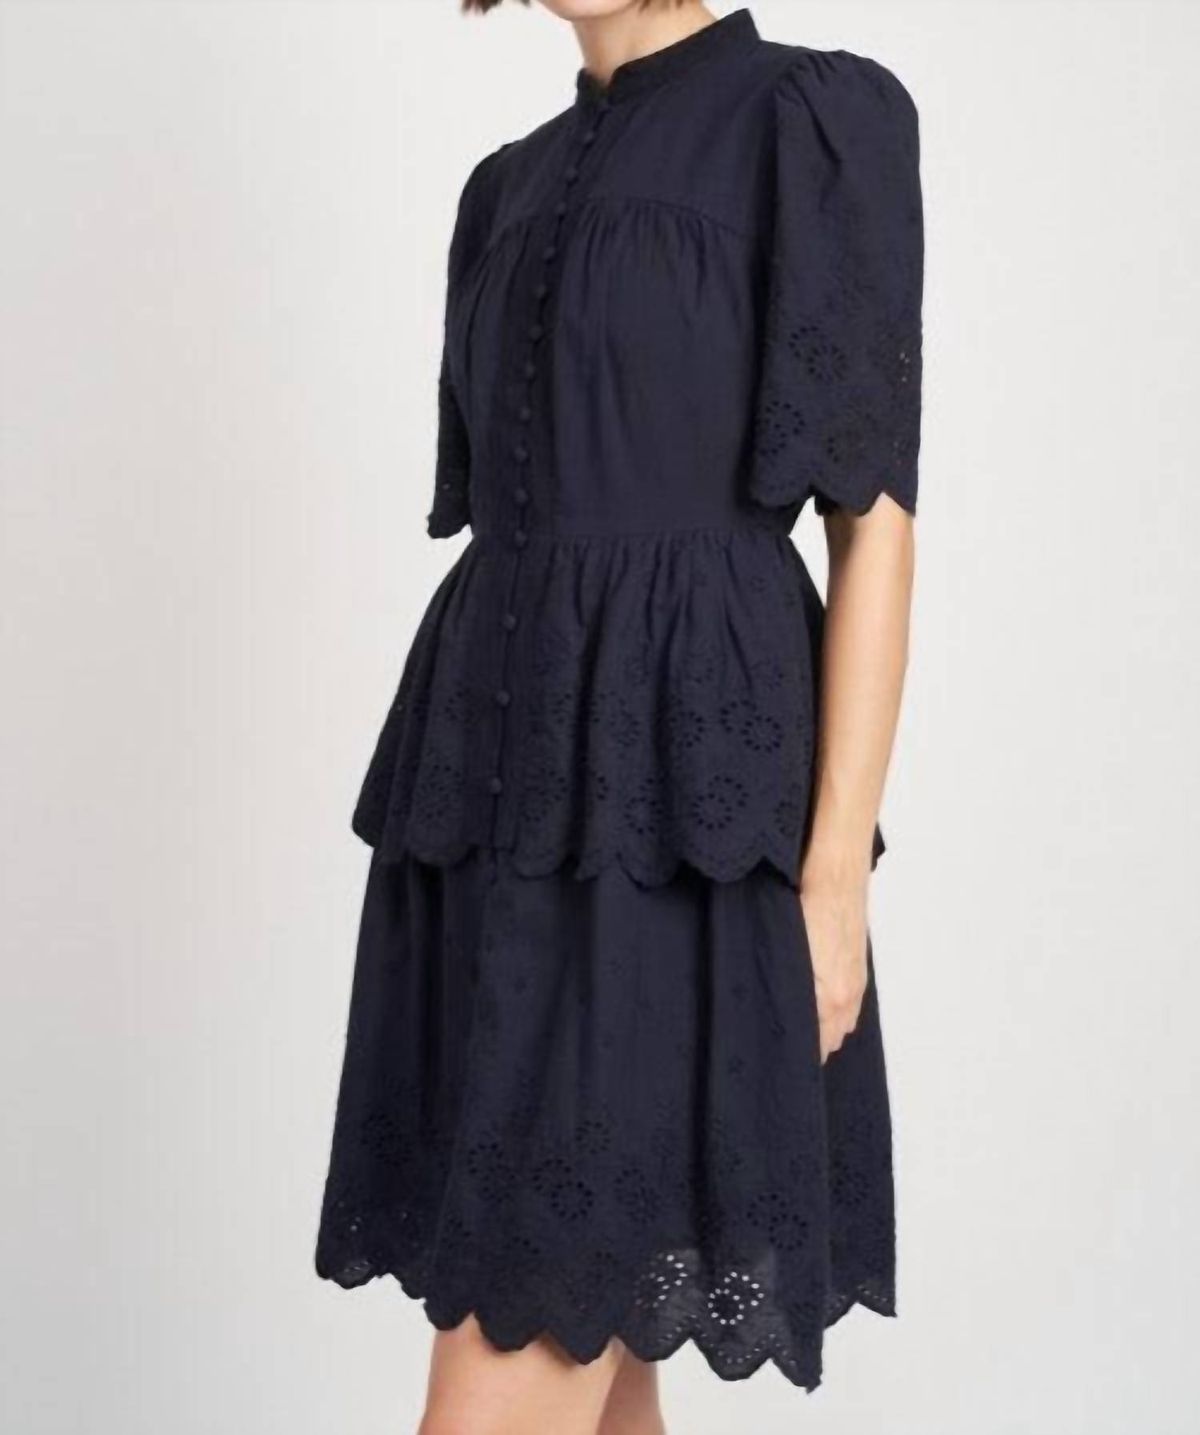 Style 1-2399236859-2696 En Saison Size L Lace Navy Black Cocktail Dress on Queenly